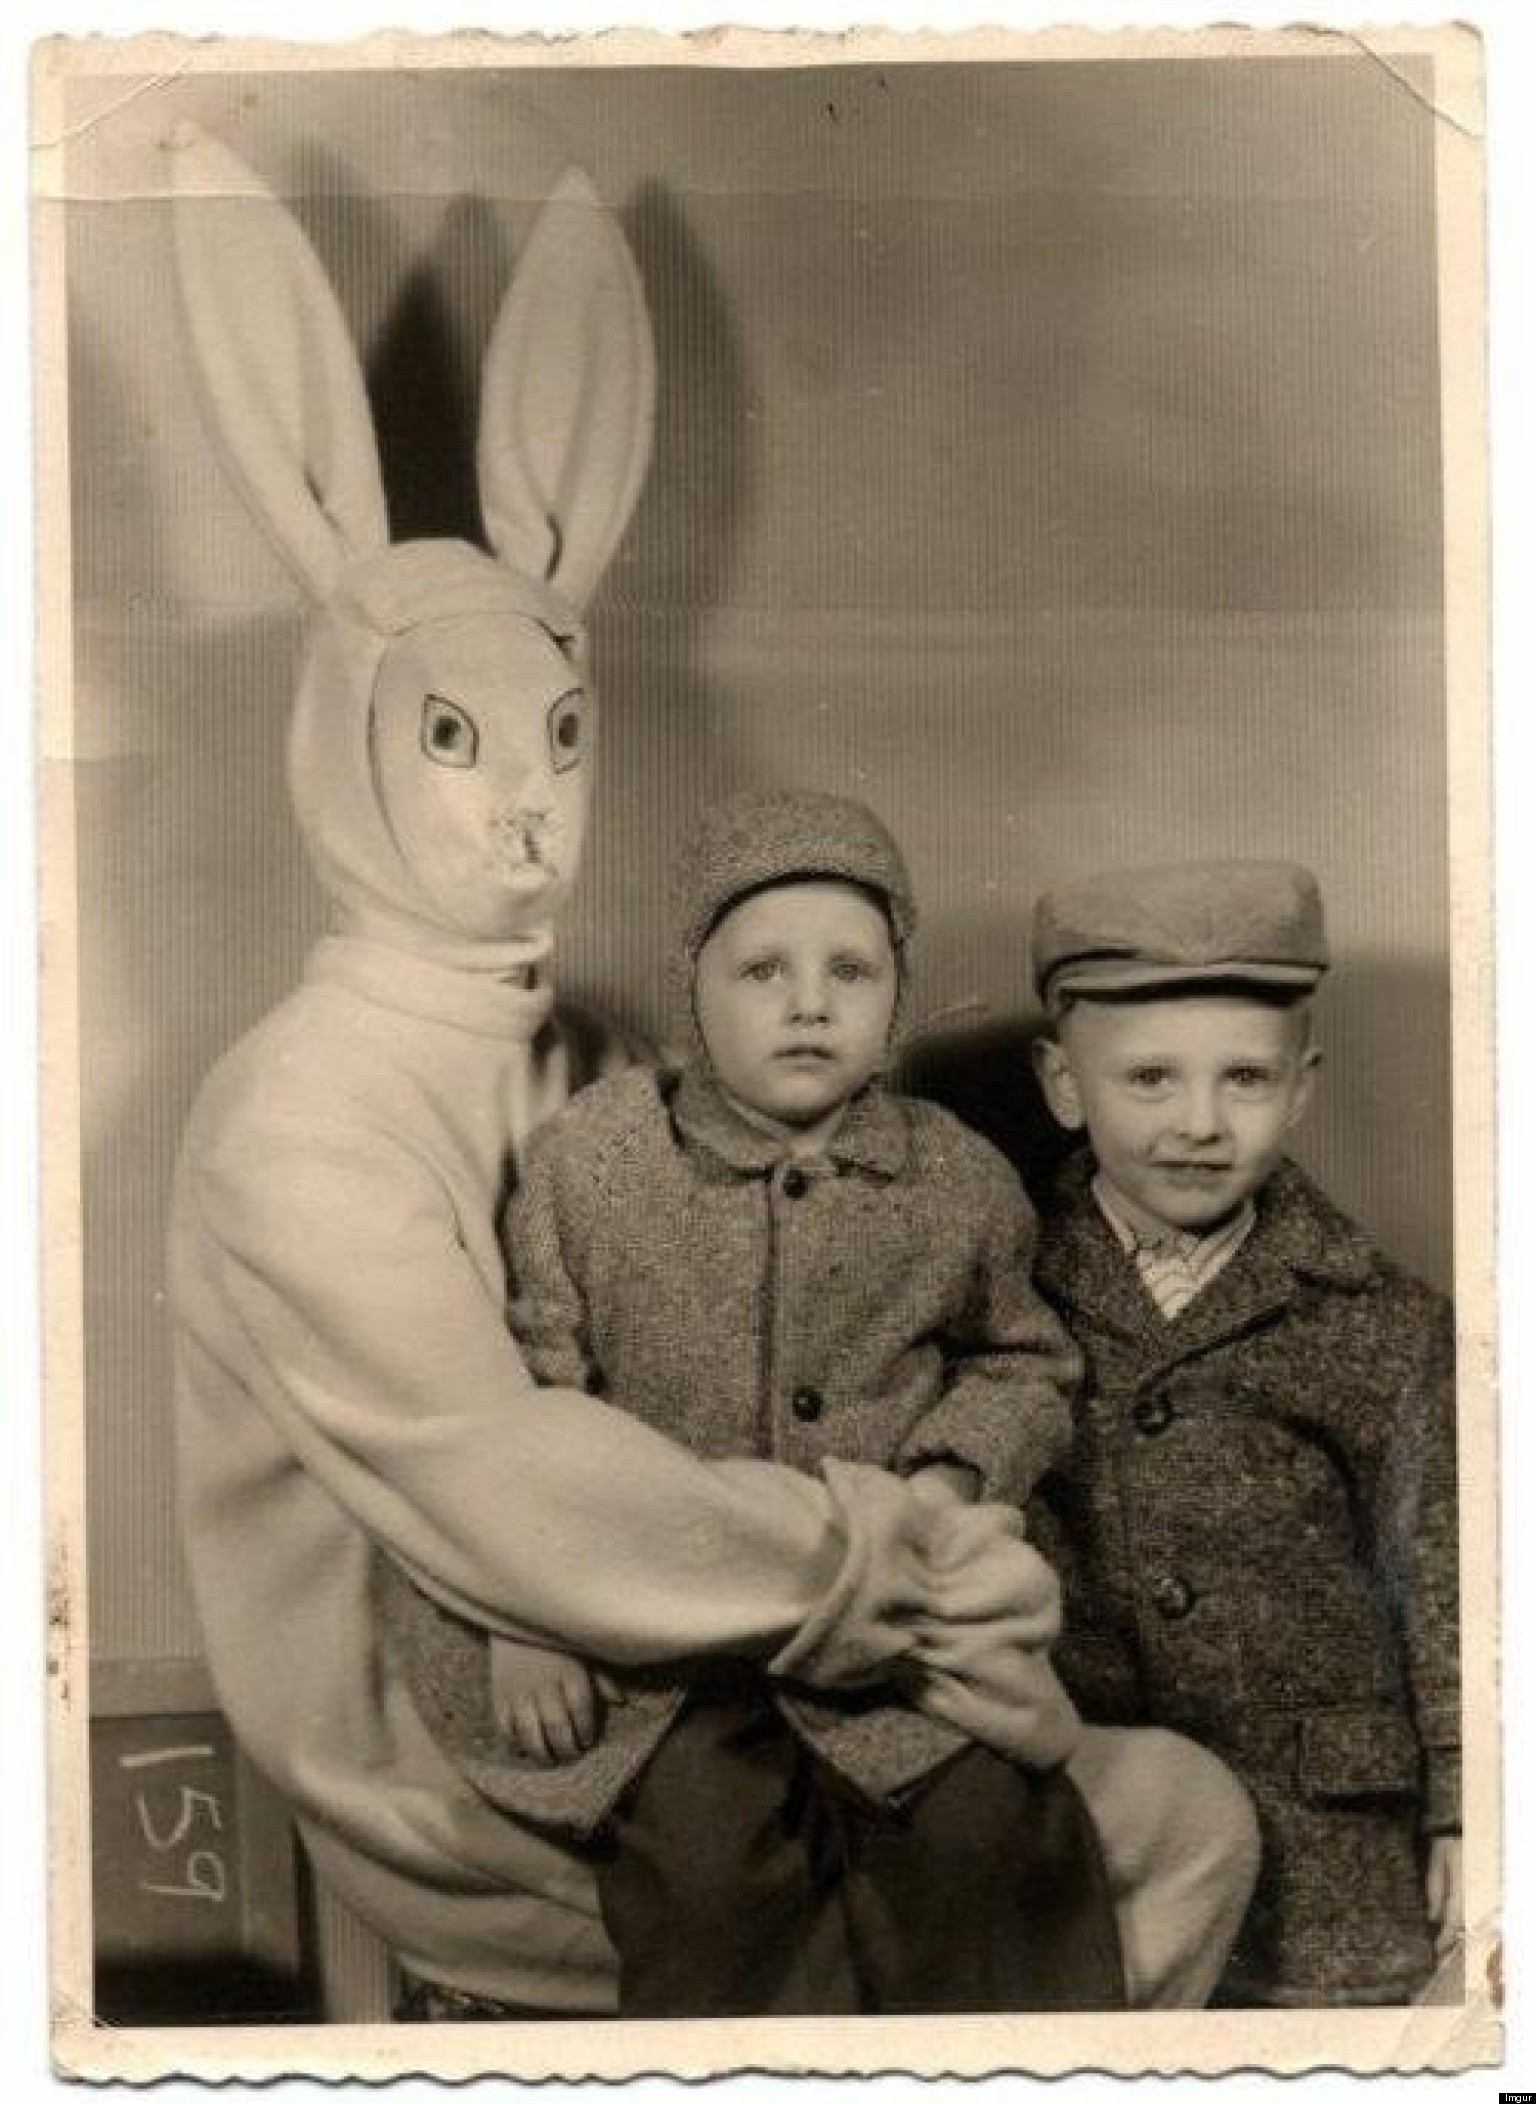 Epic Easter Bunny Fails